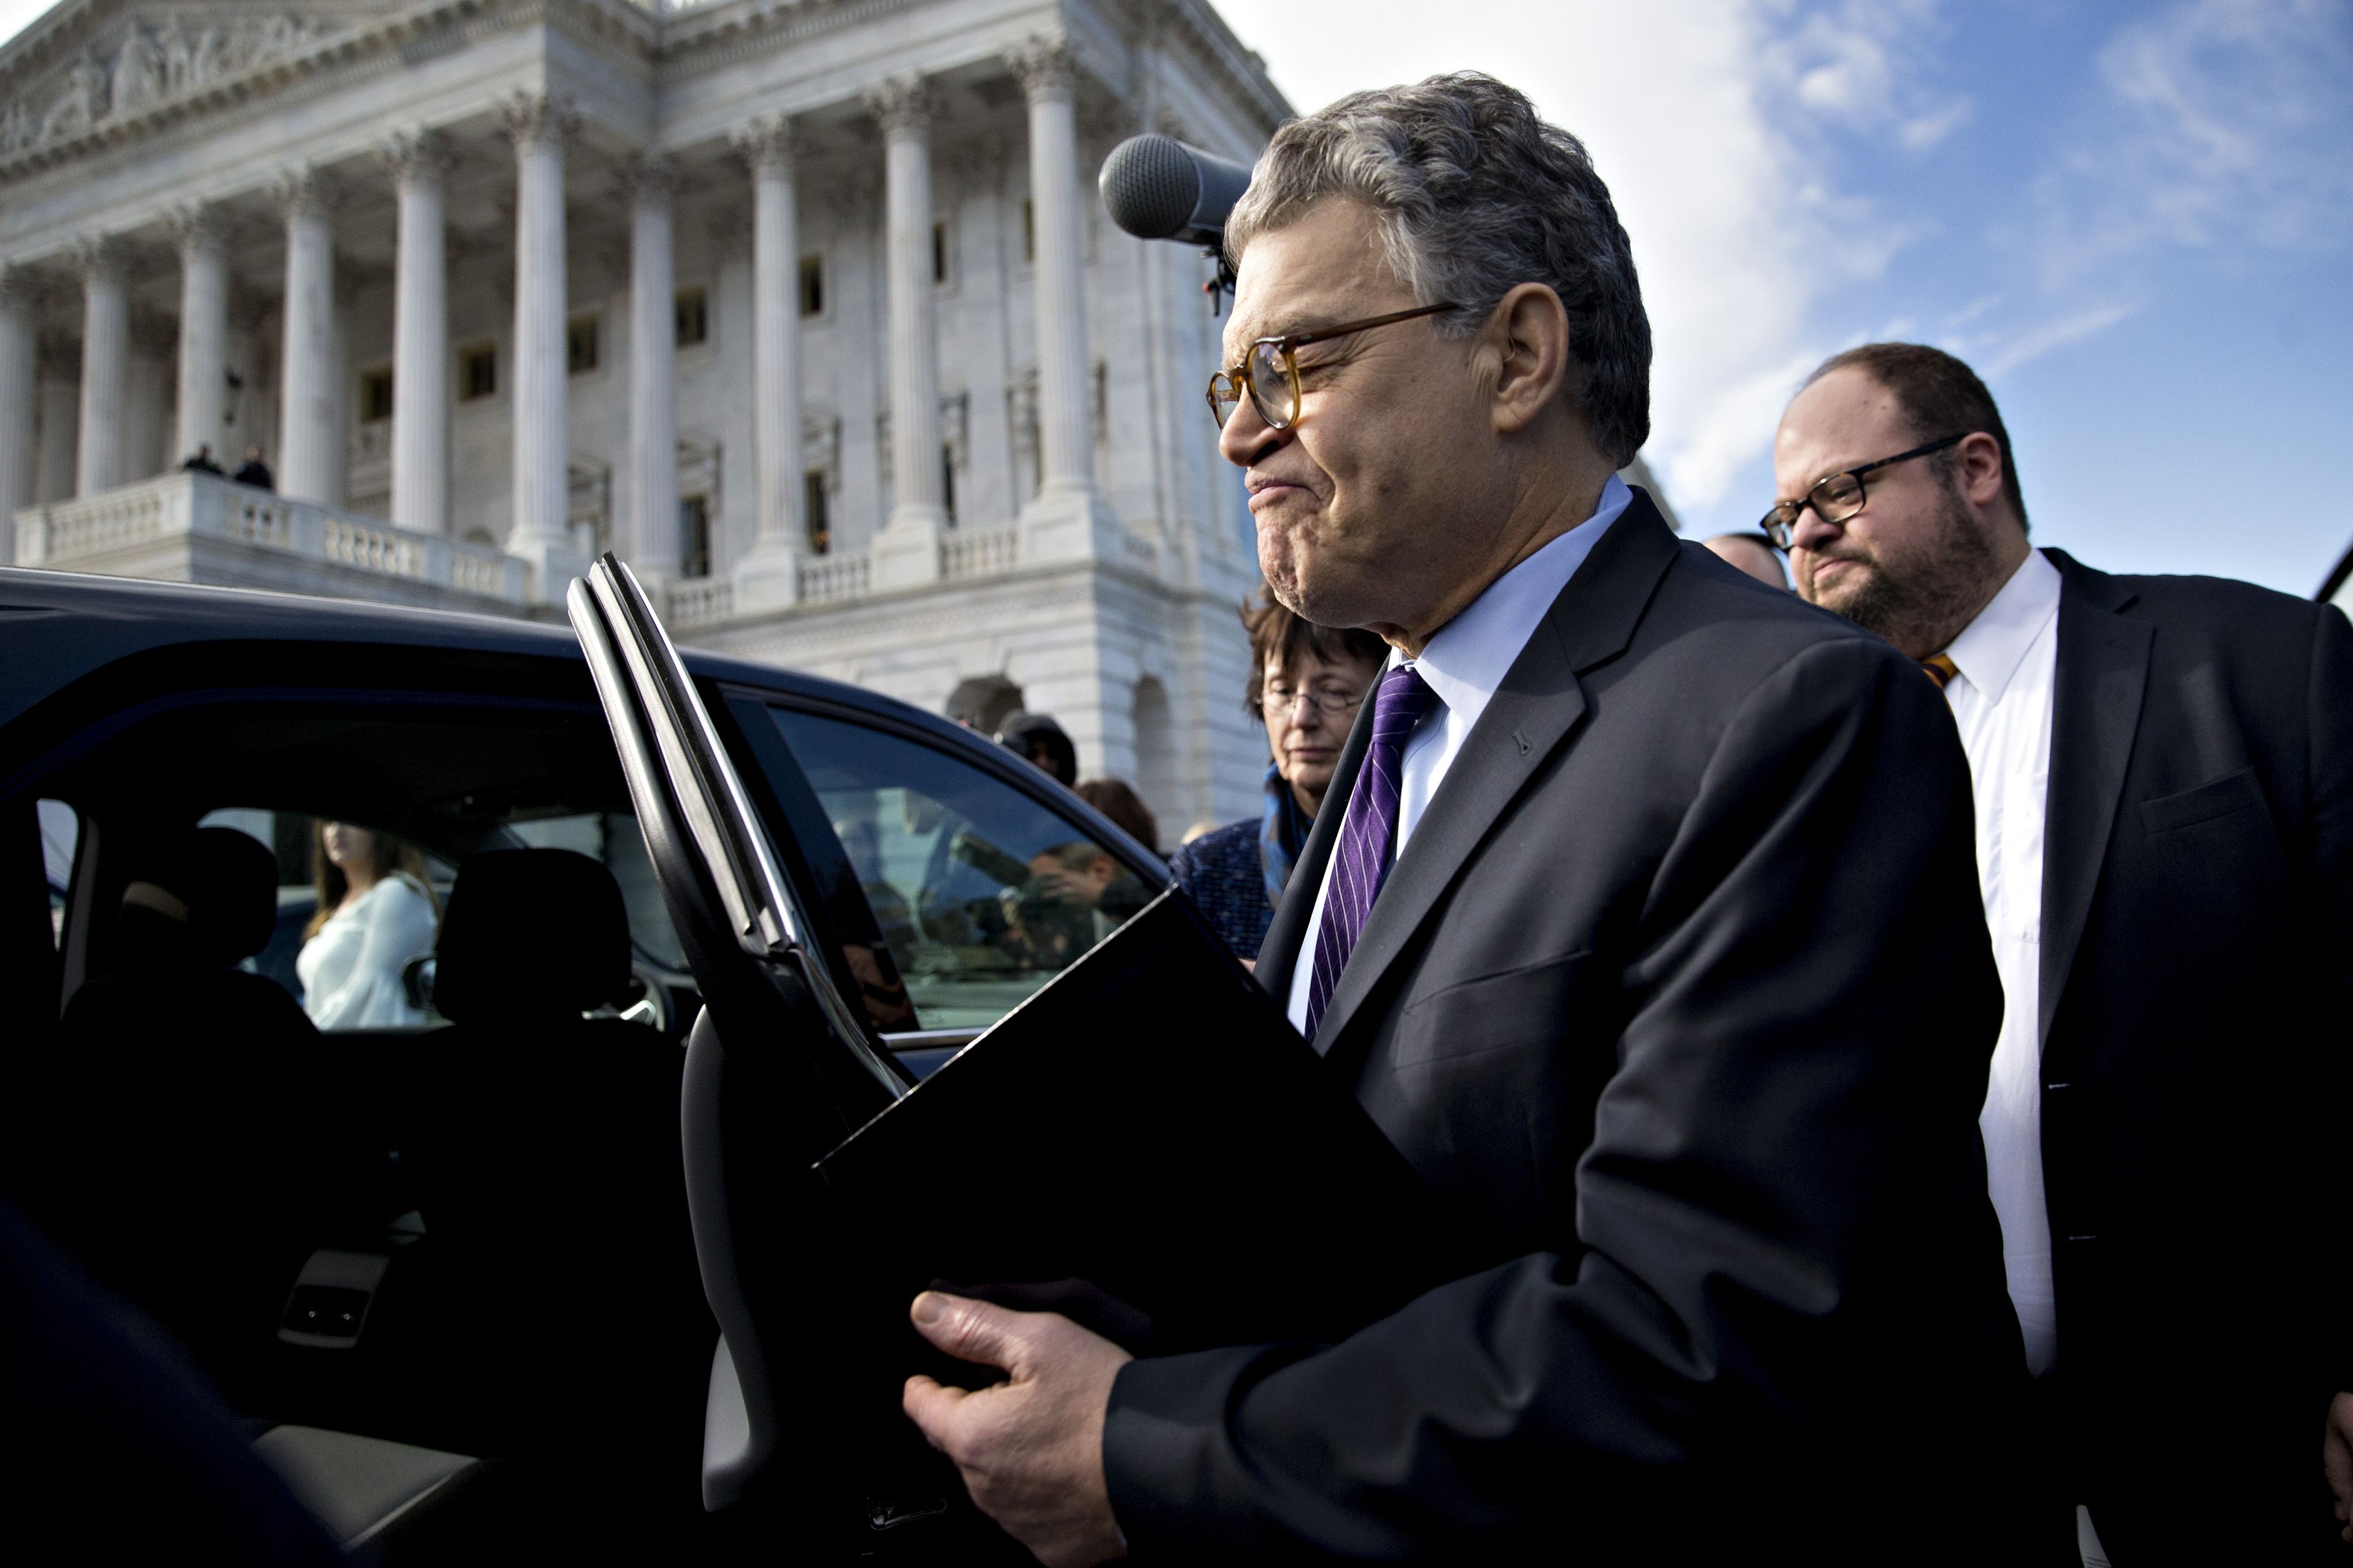 Senator Franken Quits Senate Amid Turmoil Over Misconduct Allegations